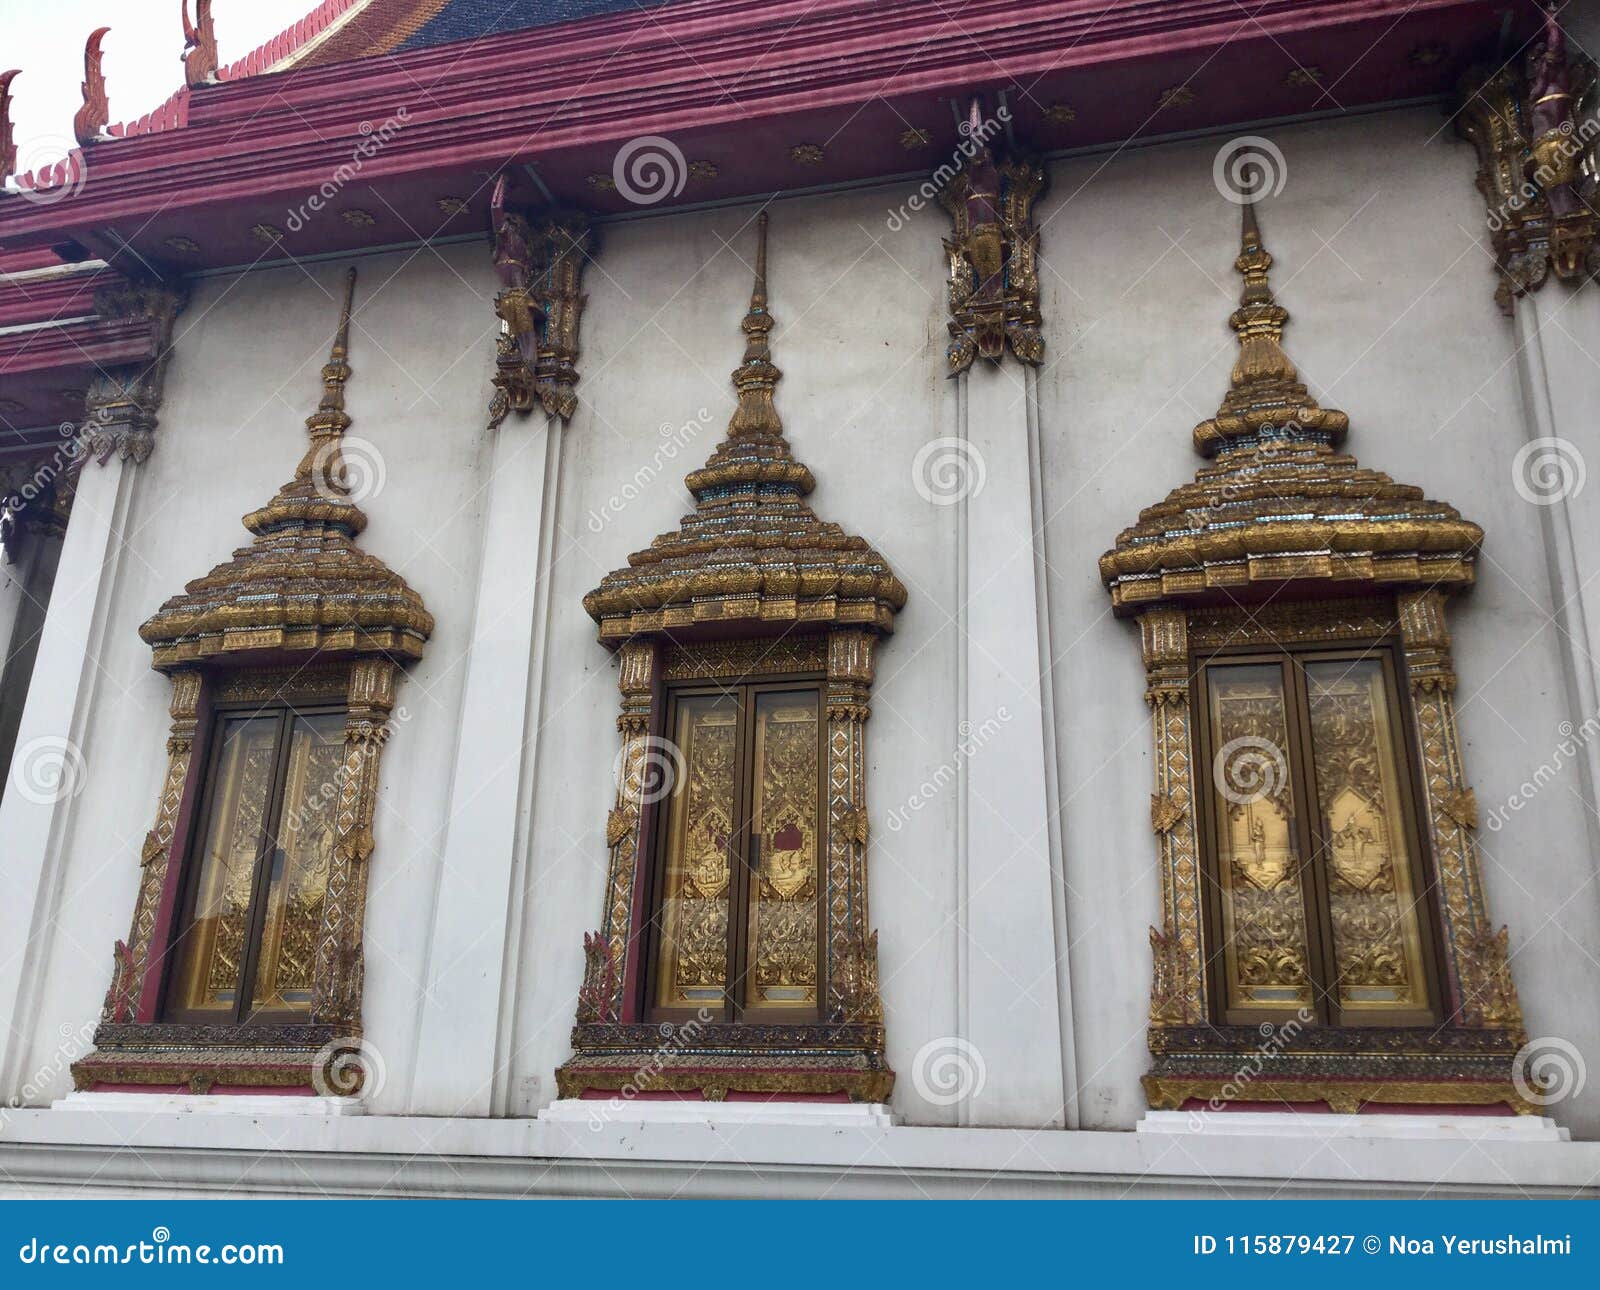 windows amarin temple , bangkok thailand